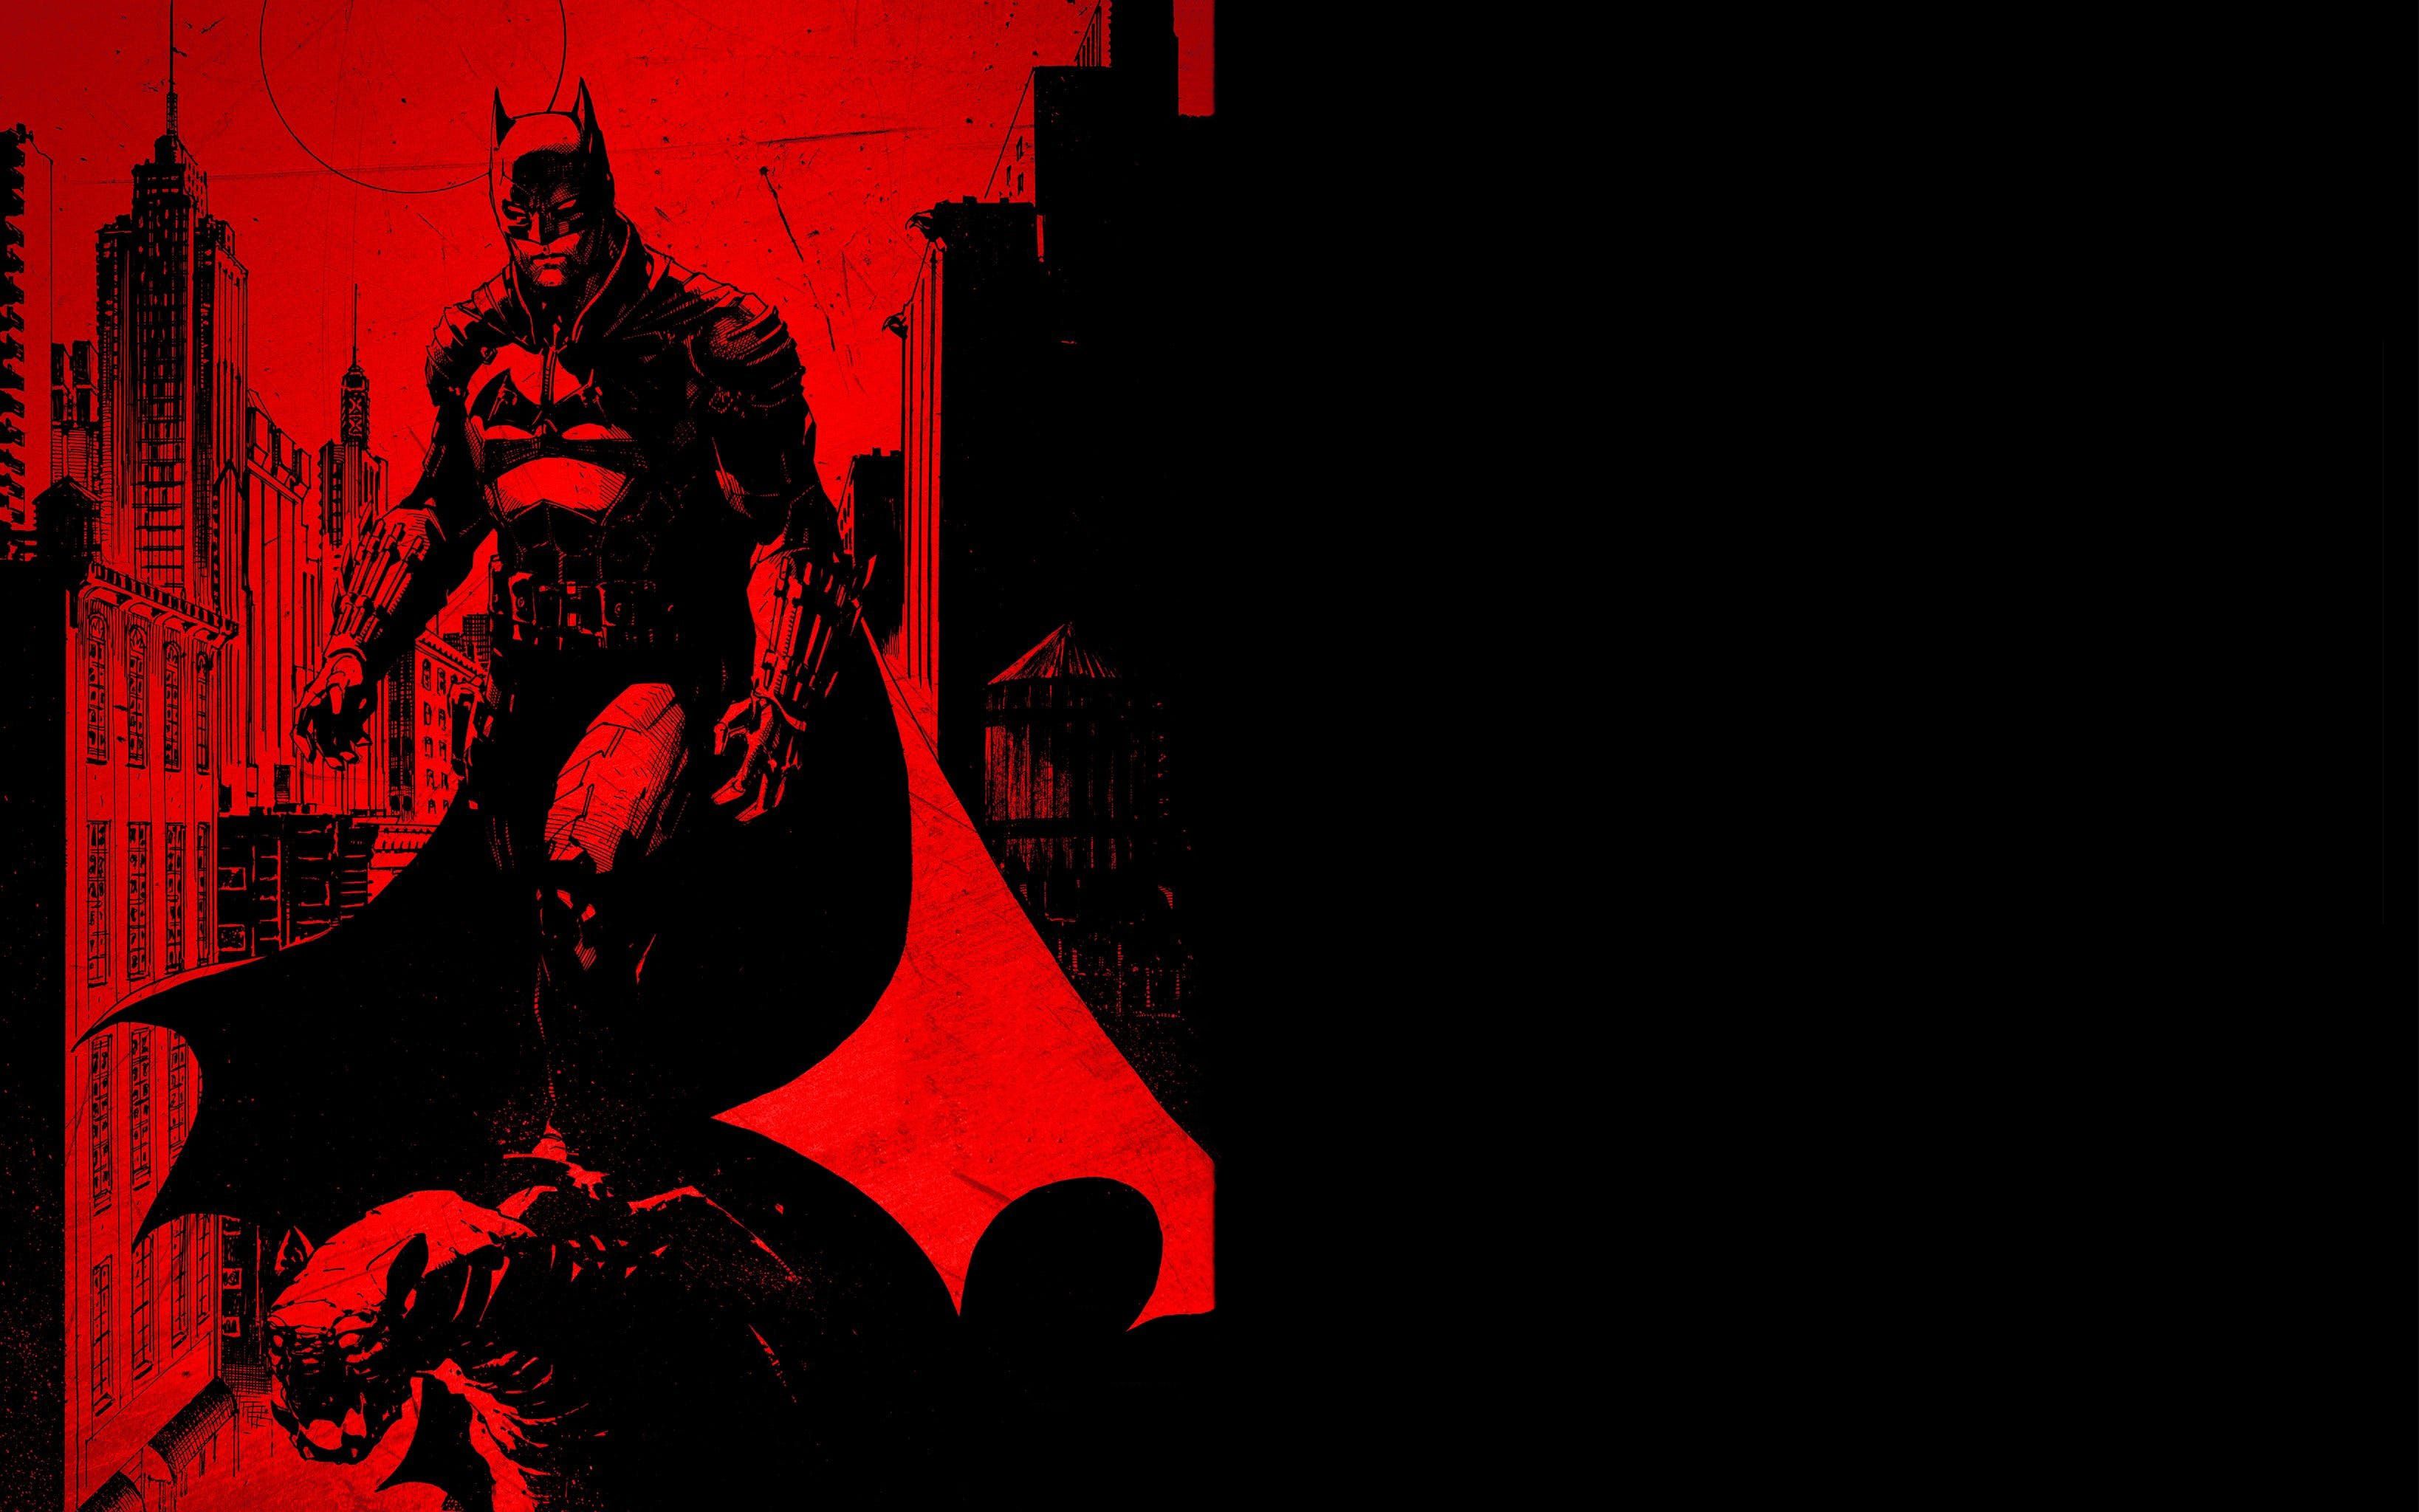 Batman 2021 Poster Wallpaper, HD Movies 4K Wallpaper, Image